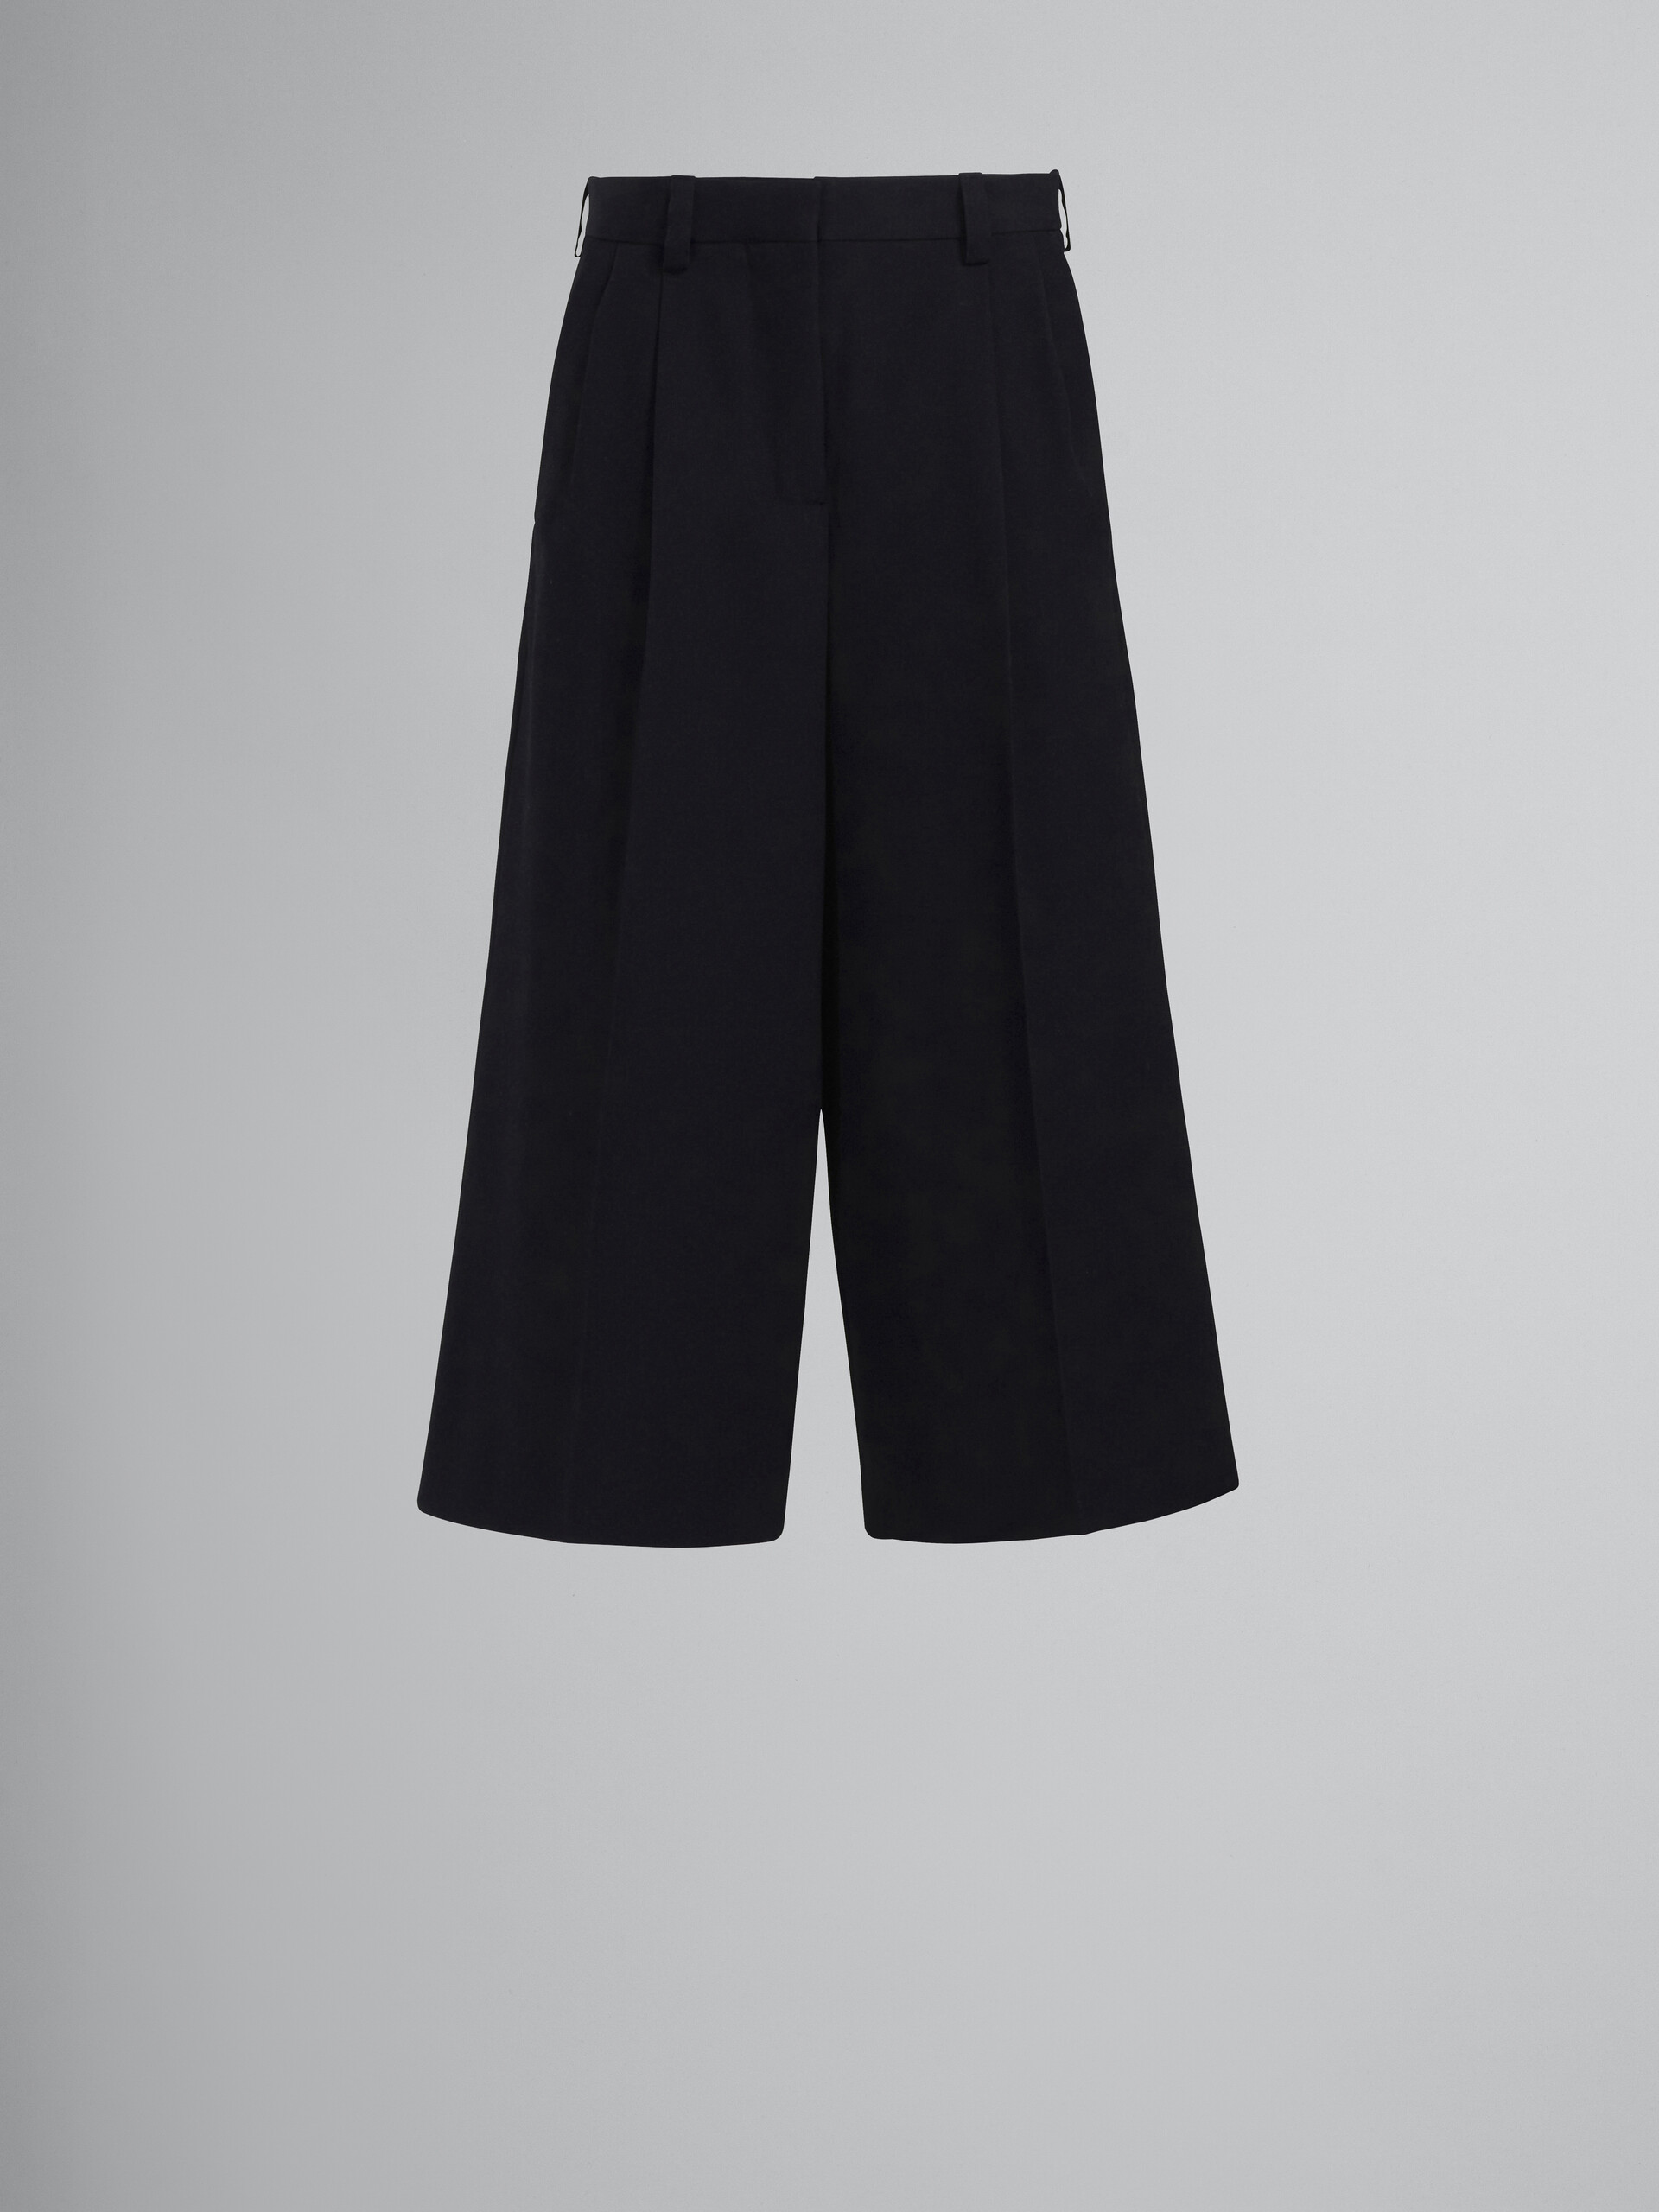 Cropped black wool pants - Pants - Image 1